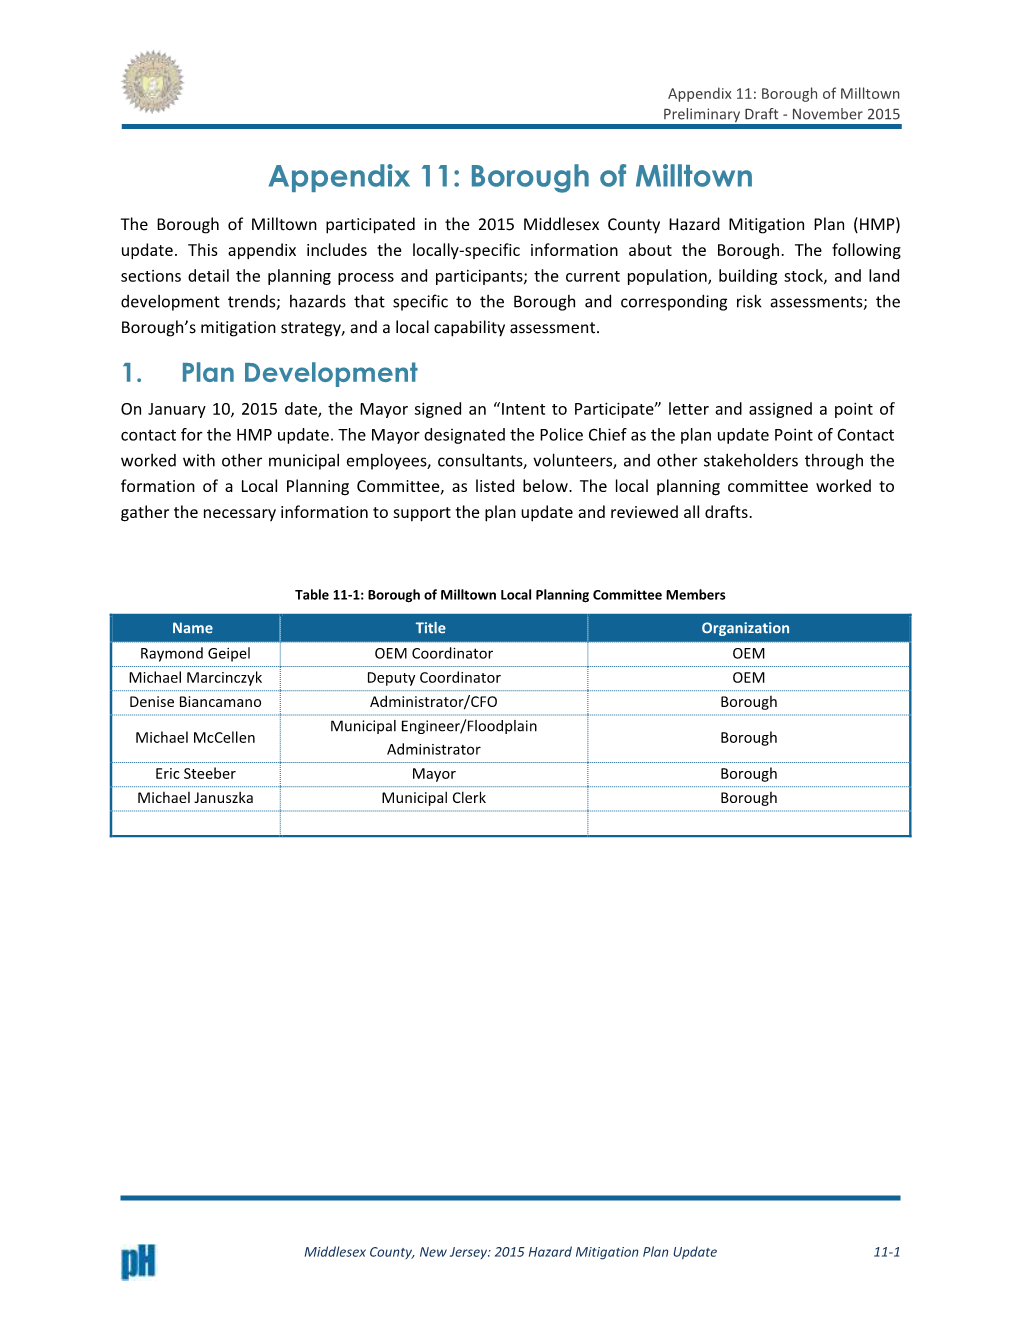 Appendix 11: Borough of Milltown Preliminary Draft - November 2015